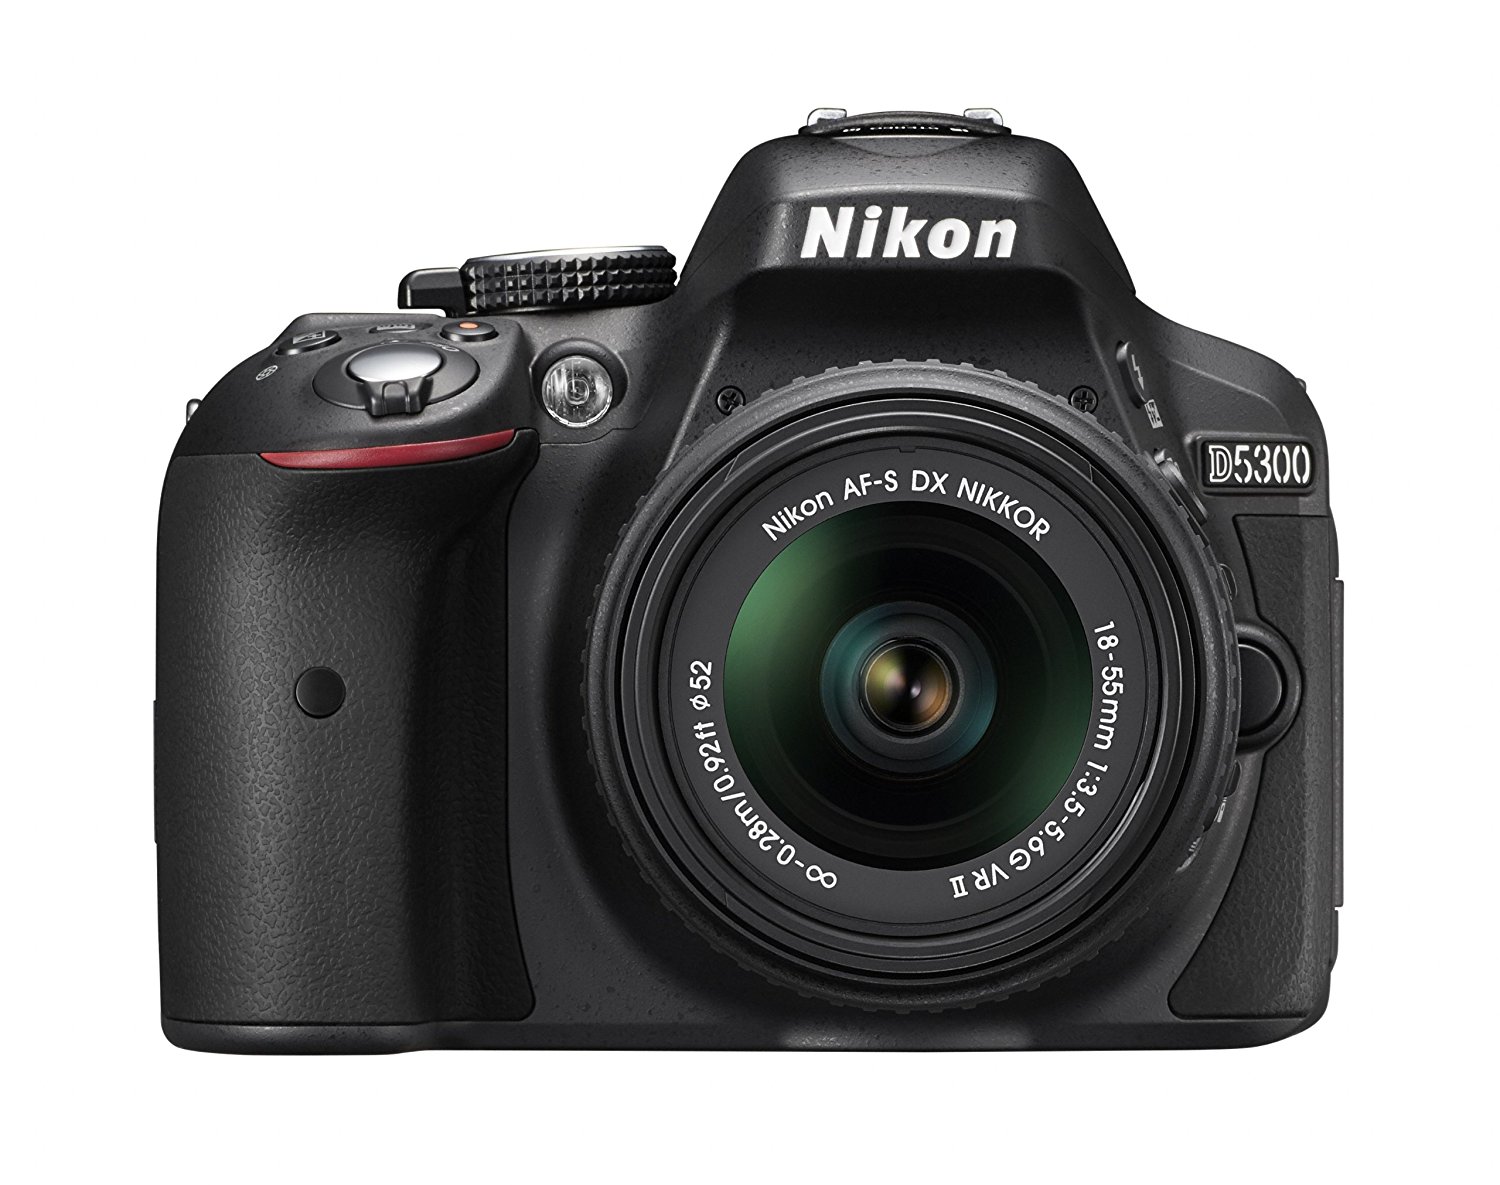 Nikon كاميرا D5300 24.2 MP CMOS SLR الرقمية مع عدسة تكبير 18-55mm f / 3.5-5.6G ED VR II Auto Focus-S DX NIKKOR (أسود)